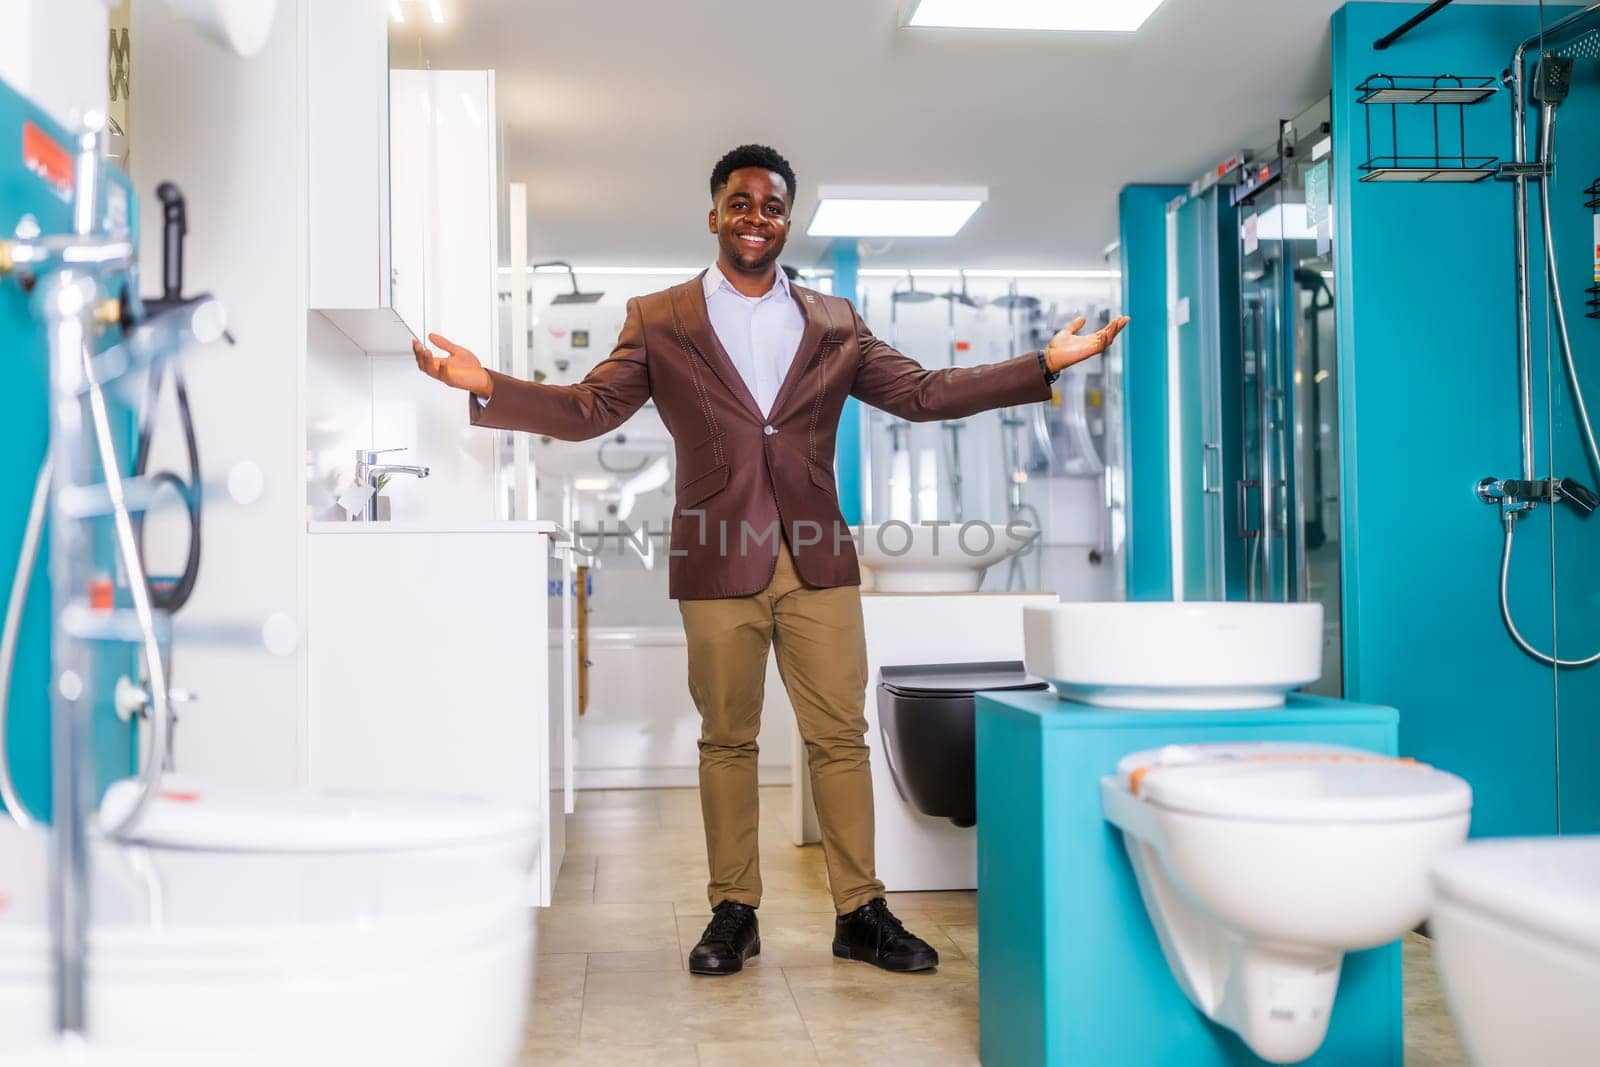 Portrait of salesperson in bathroom store by djoronimo